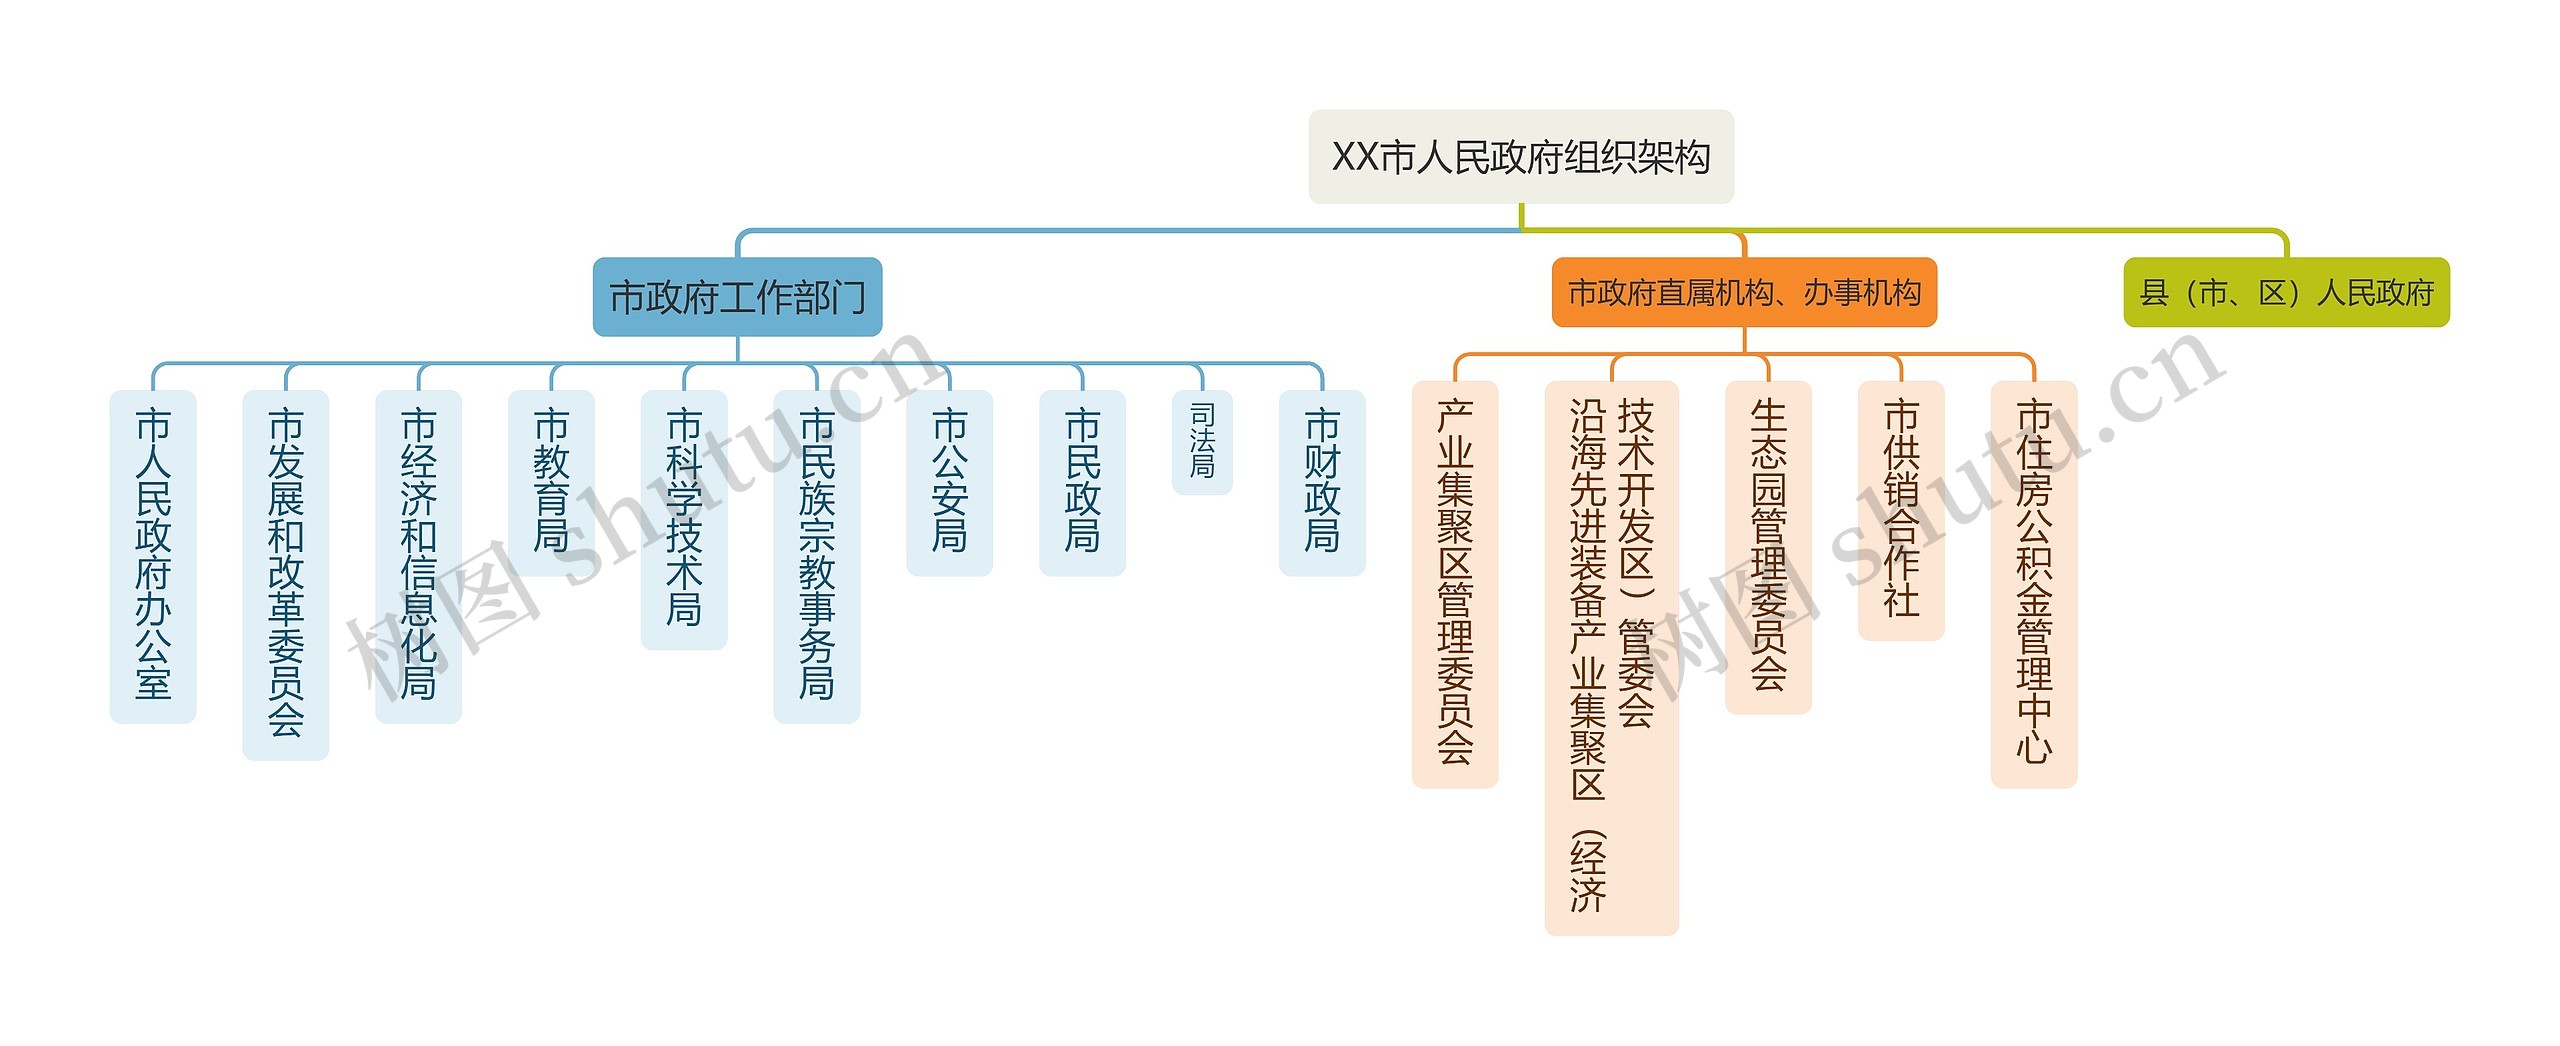 XX市人民政府组织架构图